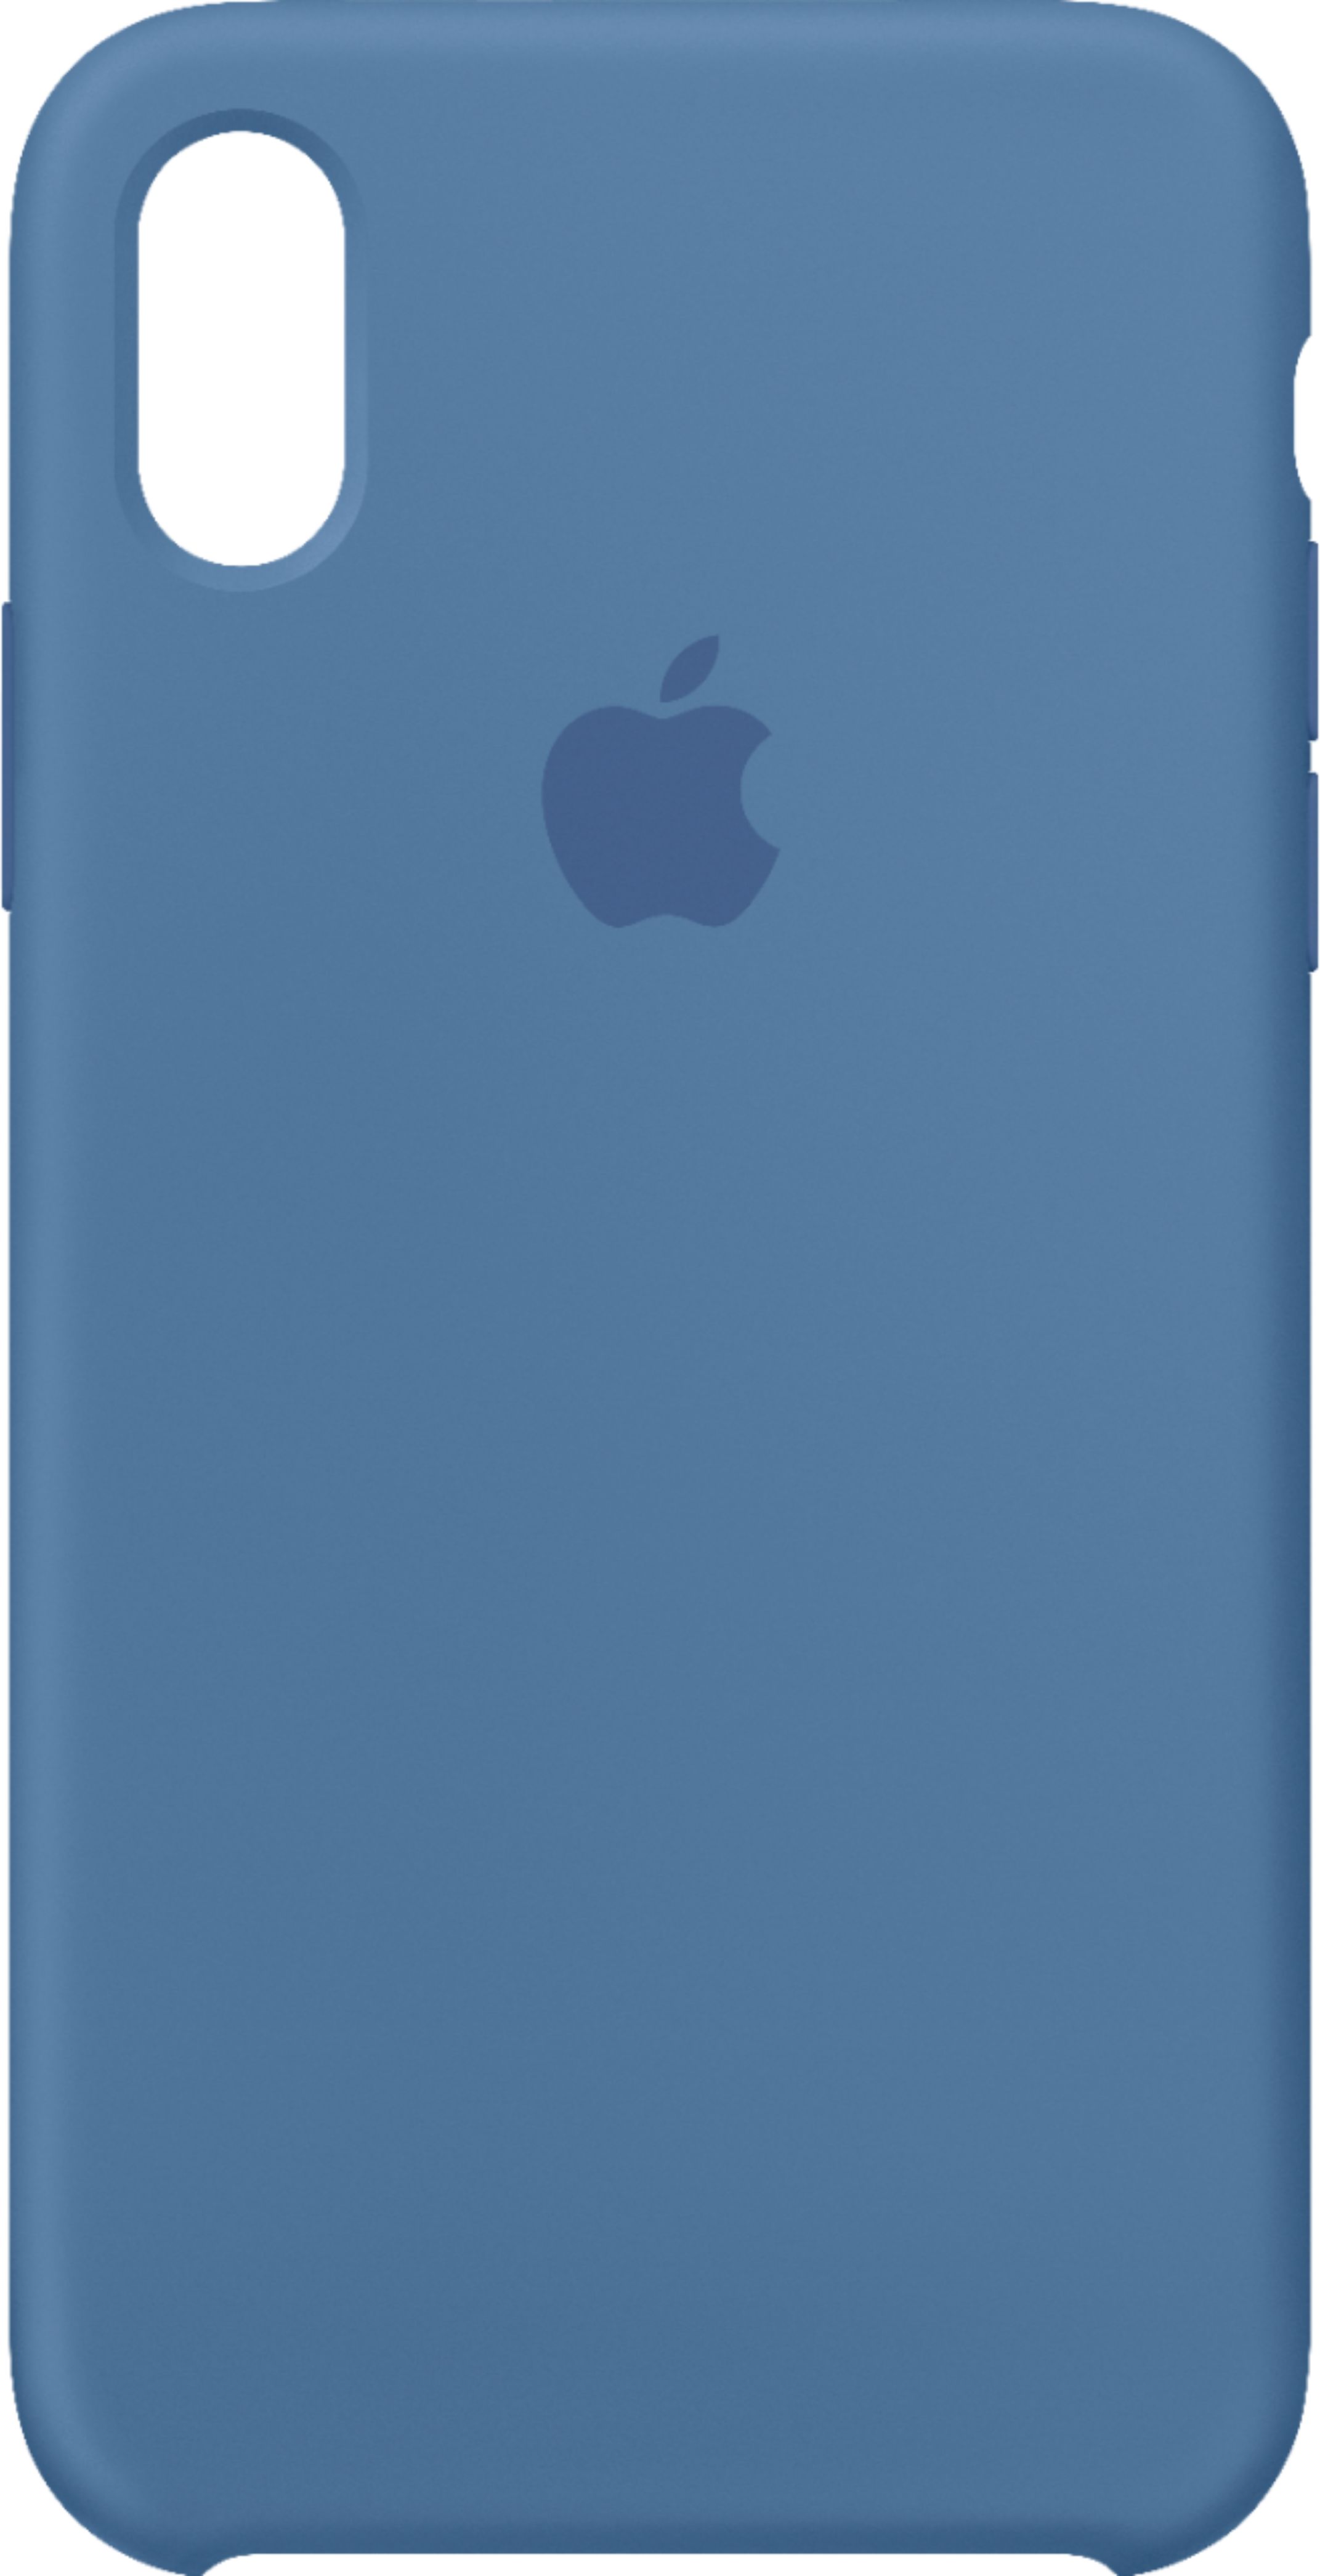 Apple iPhone® X Silicone Case Denim Blue MRG22ZM/A - Best Buy